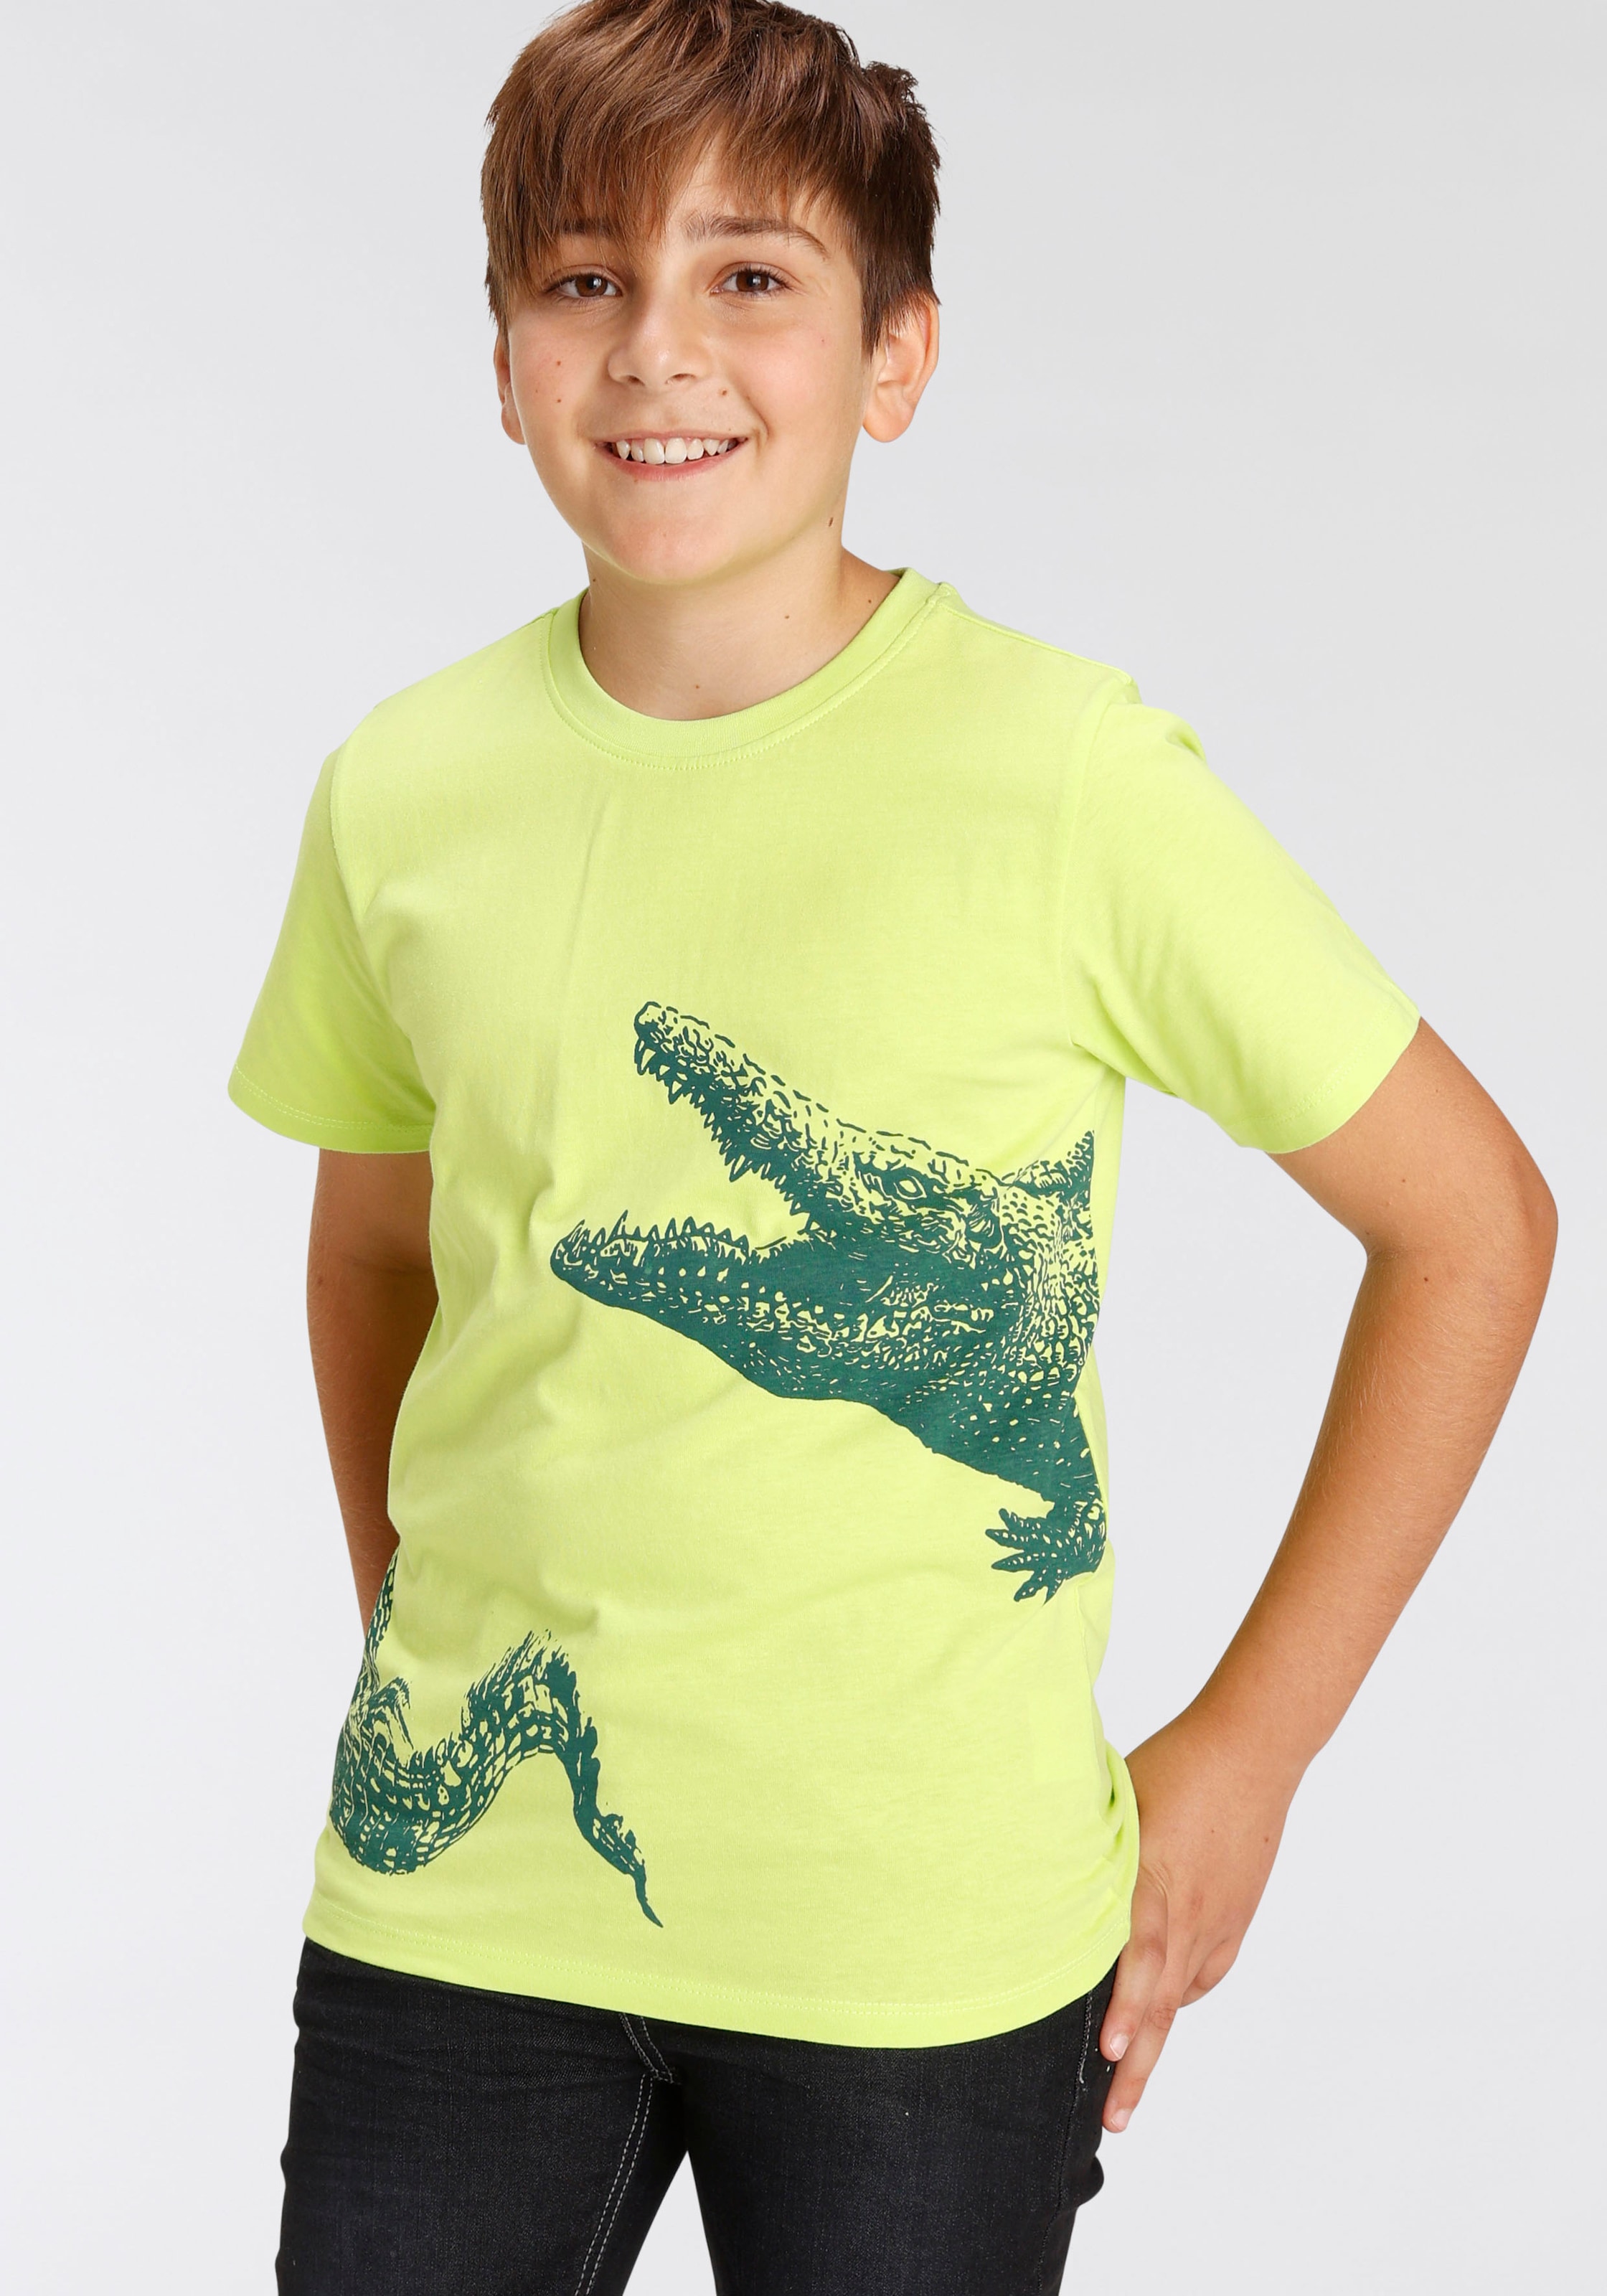 Trendige KIDSWORLD T-Shirt »KROKODIL« bestellen versandkostenfrei